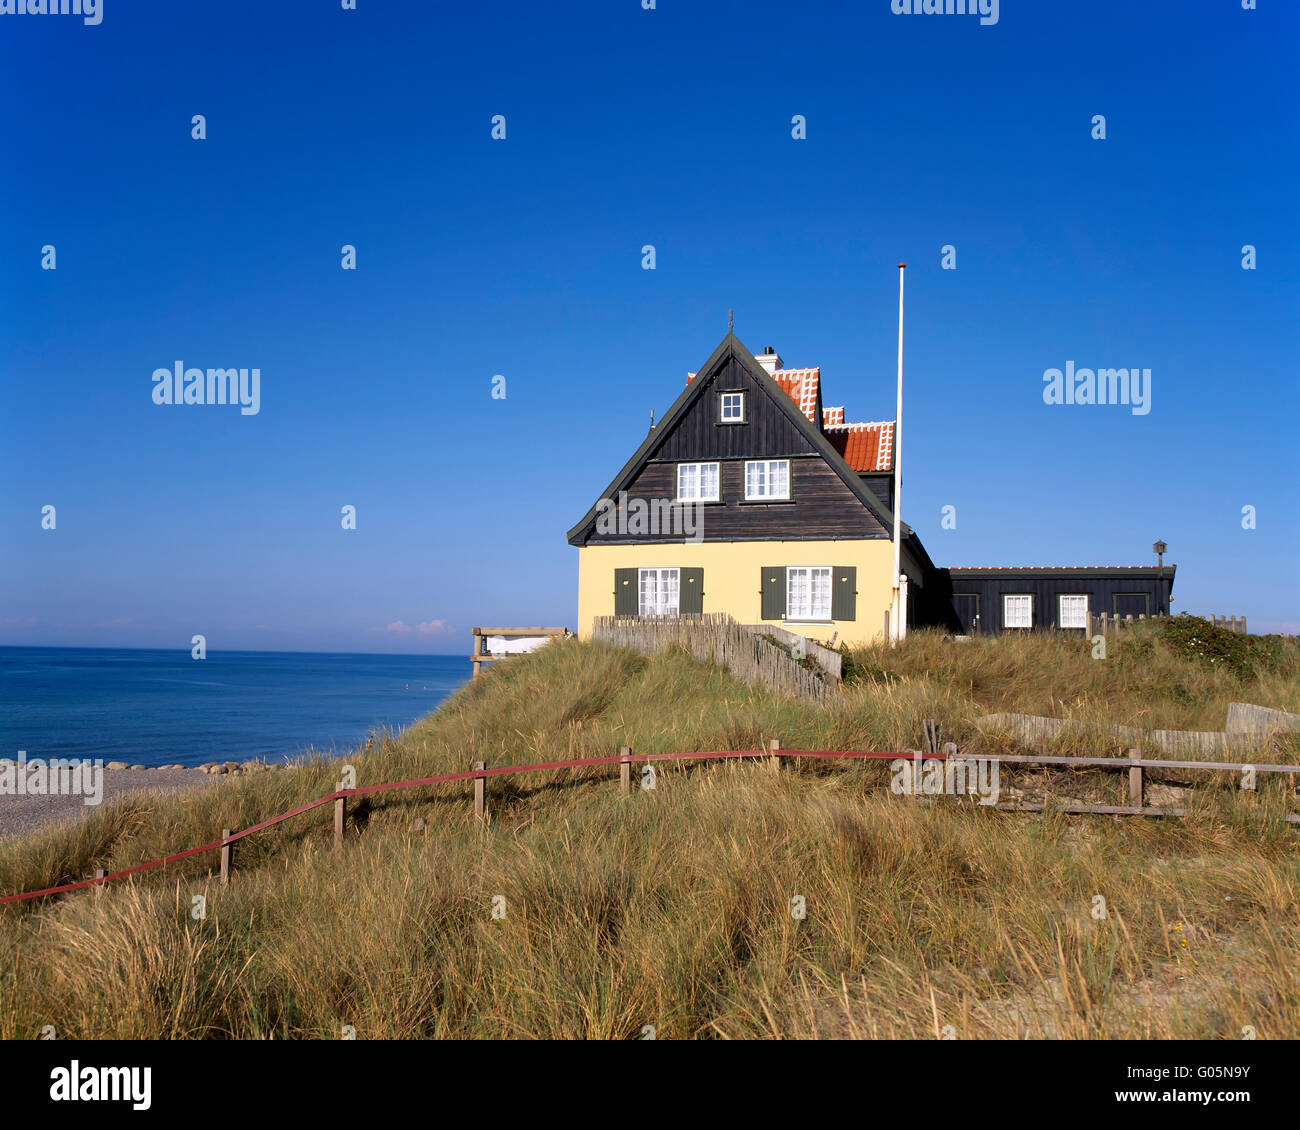 Holiday house in the dunes of Gammel Skagen,  northern Jutland, Denmark, Scandinavia, Europe Stock Photo